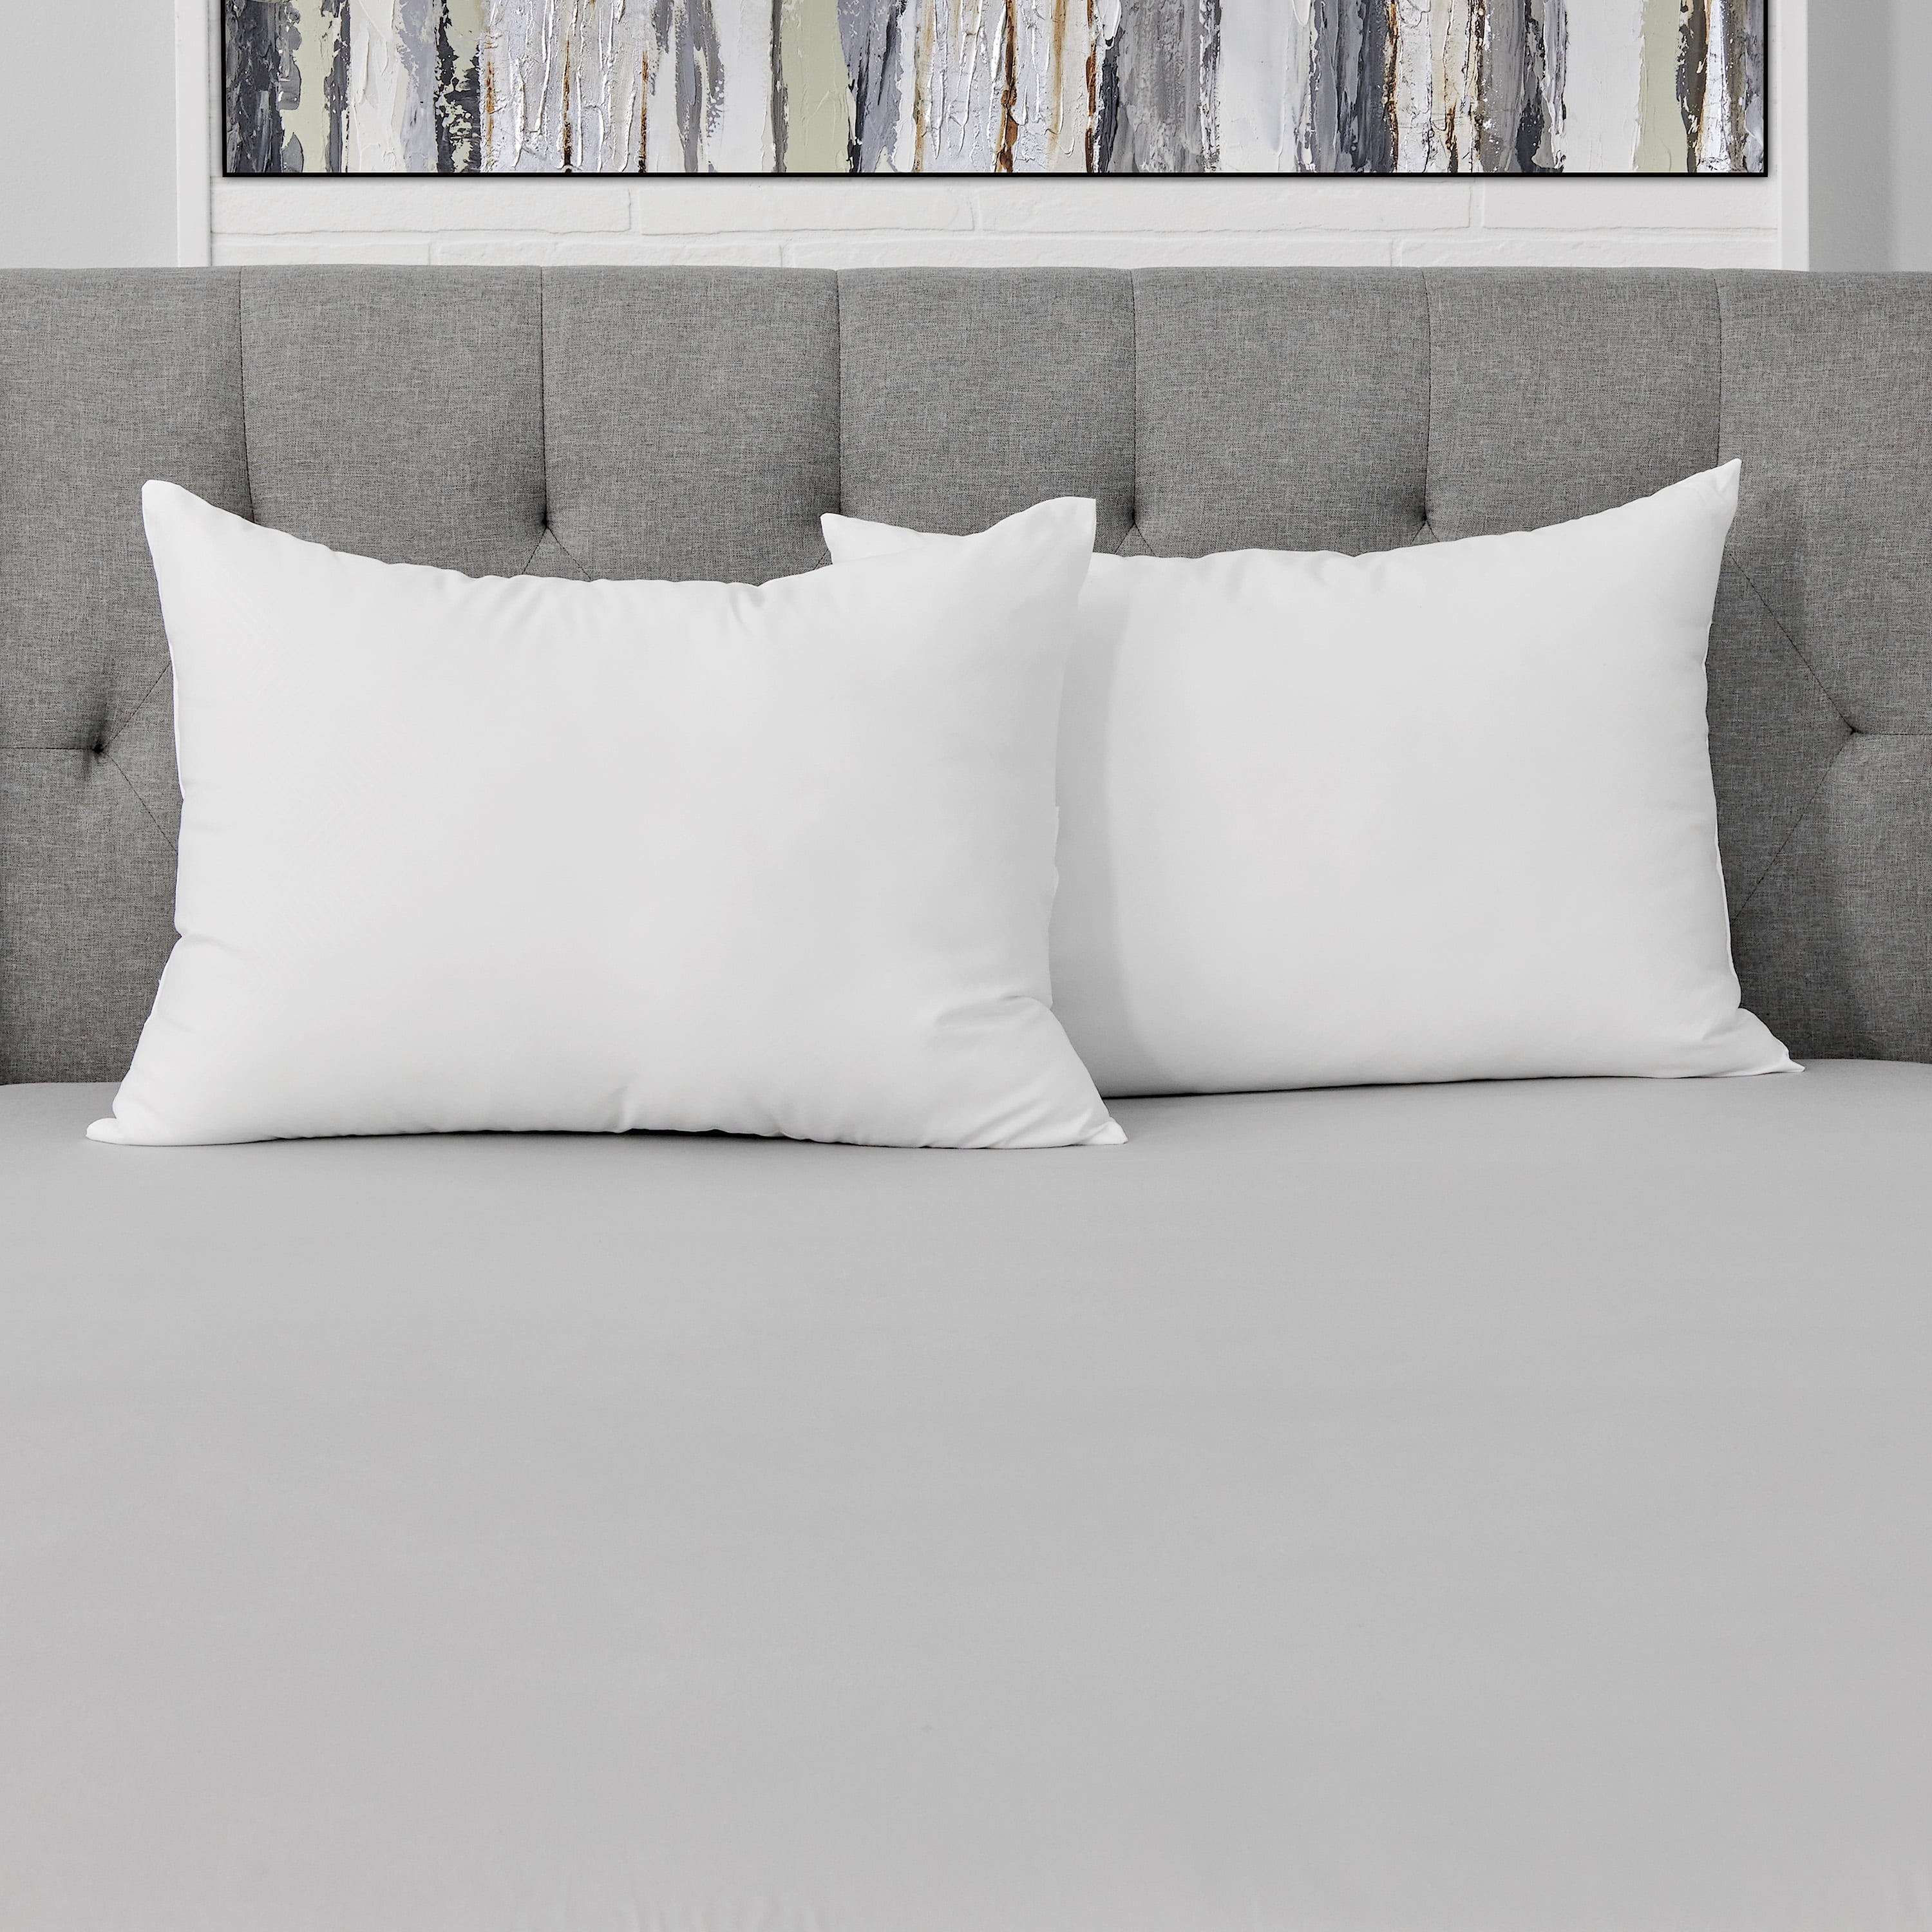 Mainstays Soft Support Microfiber Bed Pillow, Standard/Queen, Set of 2